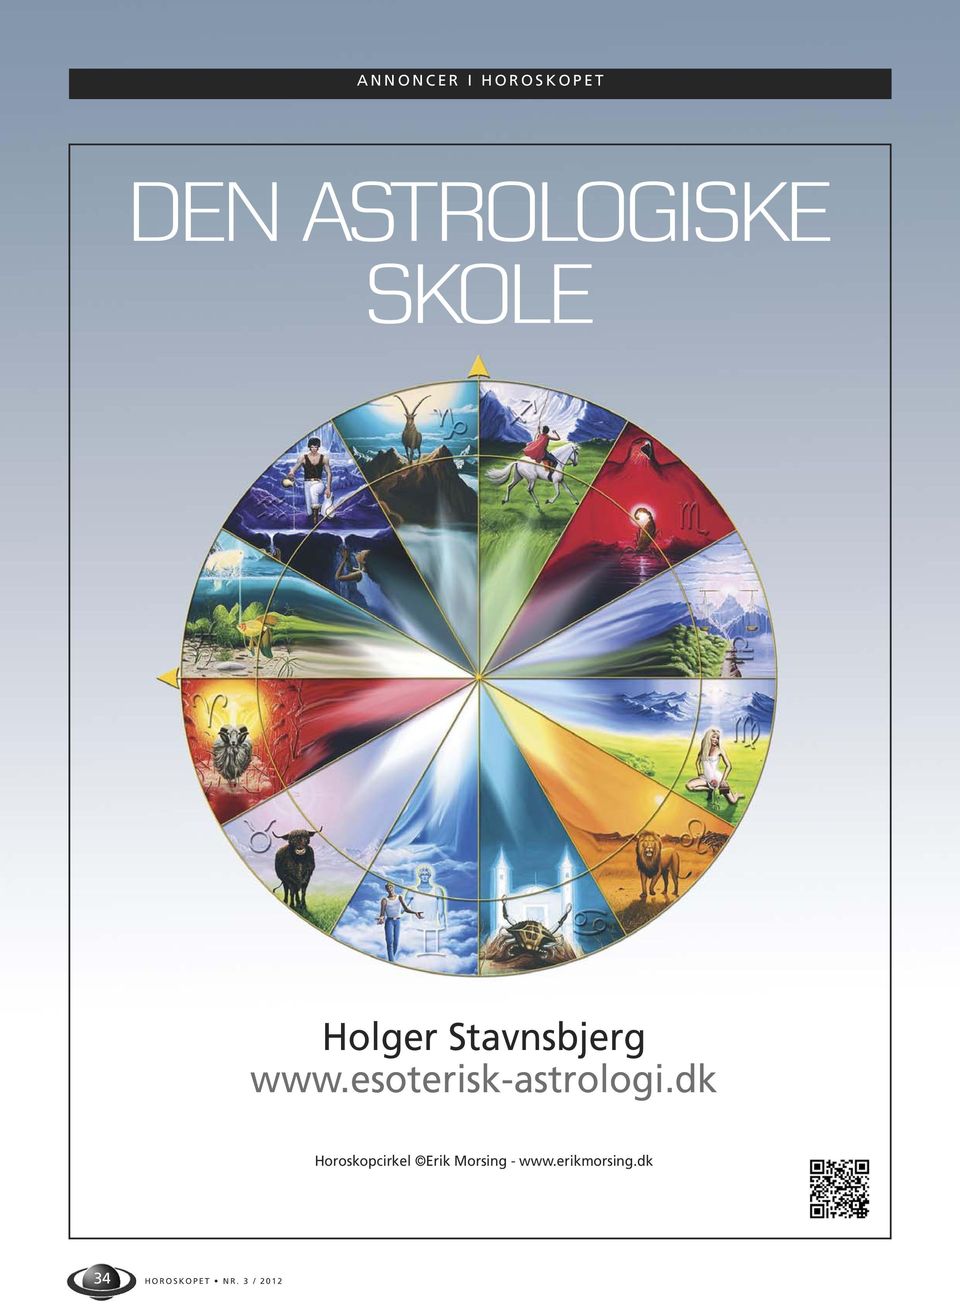 esoterisk-astrologi.